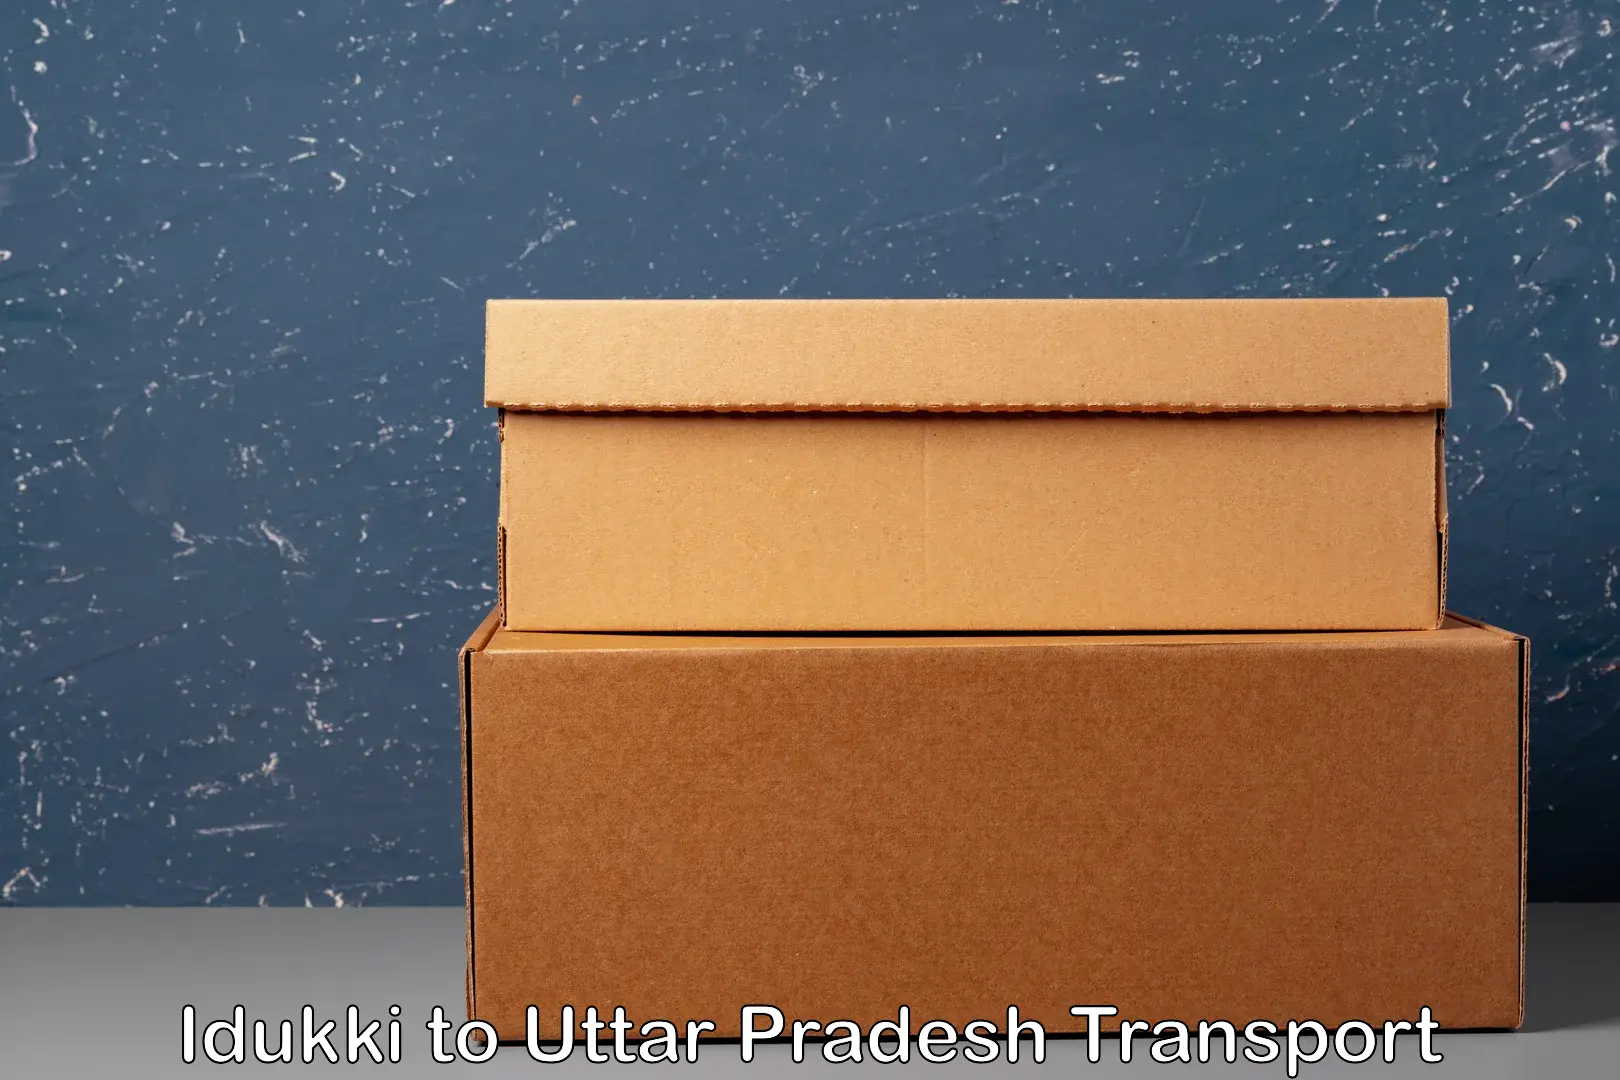 Furniture transport service Idukki to Uttar Pradesh